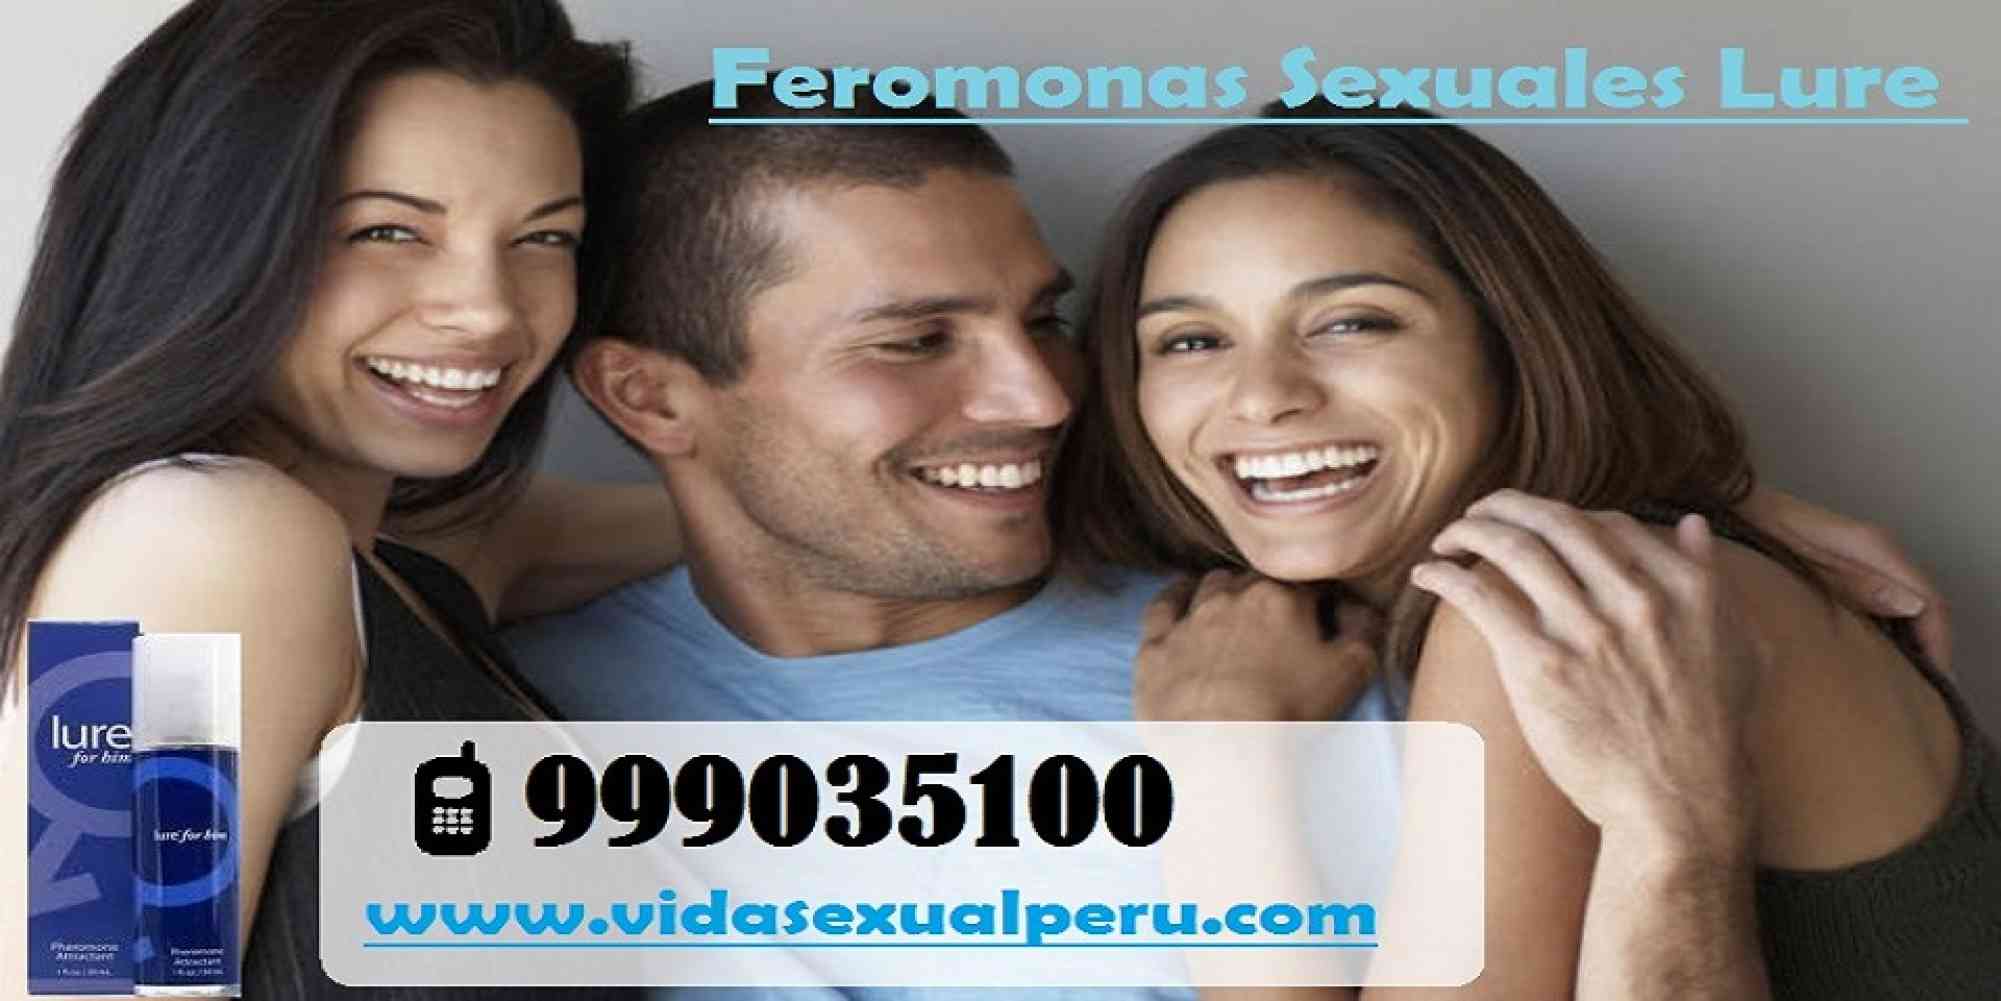 FEROMONAS SAN MARTIN, RIOJA -999035100 en anuncio clasificado